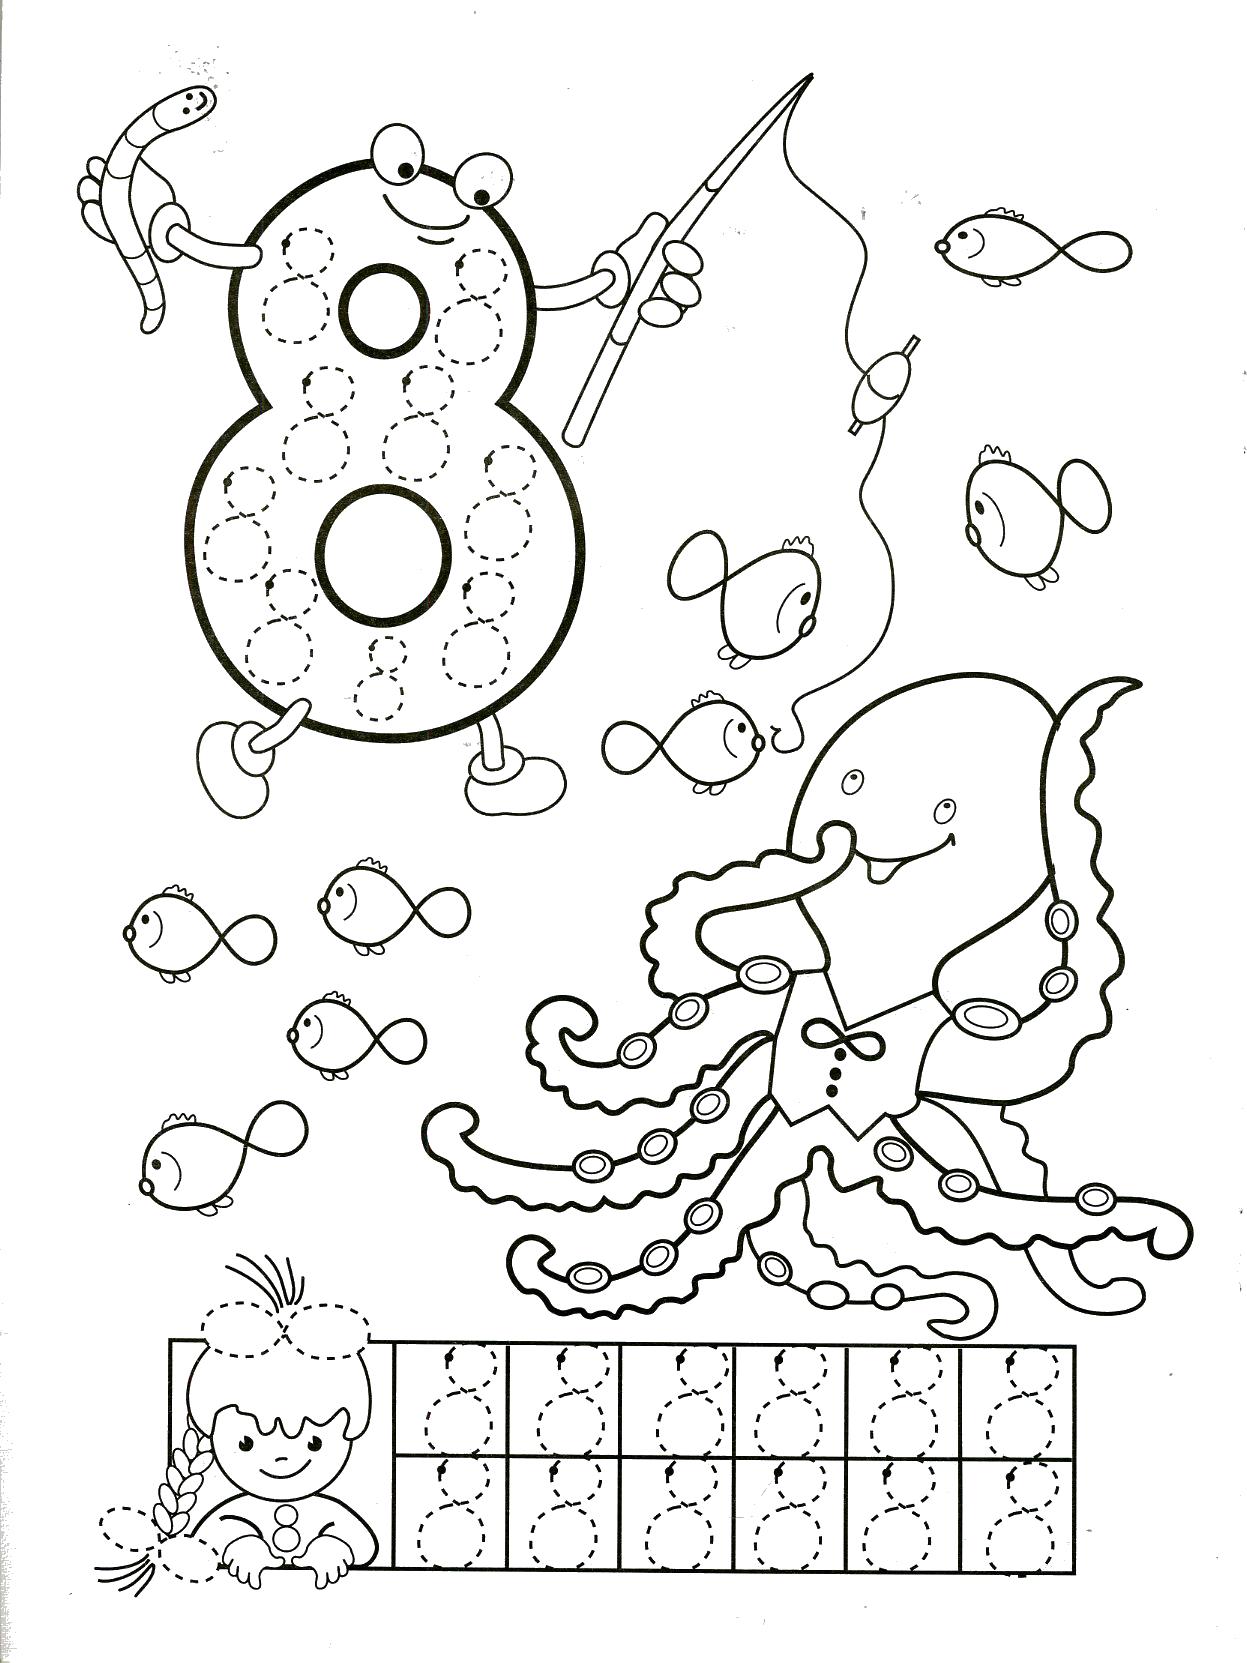   Цифра 8, с раскраской осьминог и рыбки, девочка с бантиками